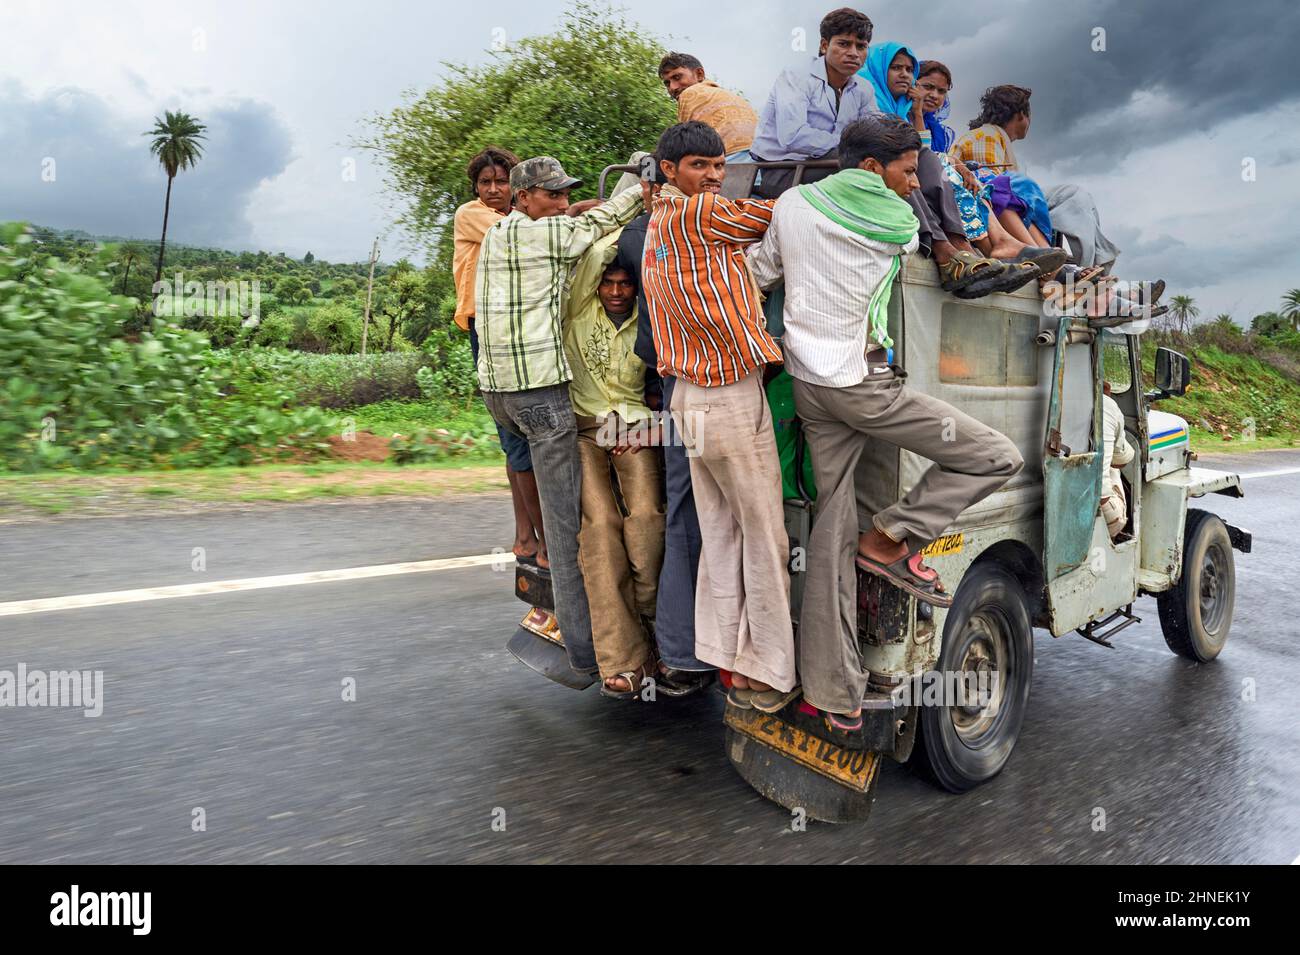 Inde Rajasthan. Transports en commun très occupés Banque D'Images